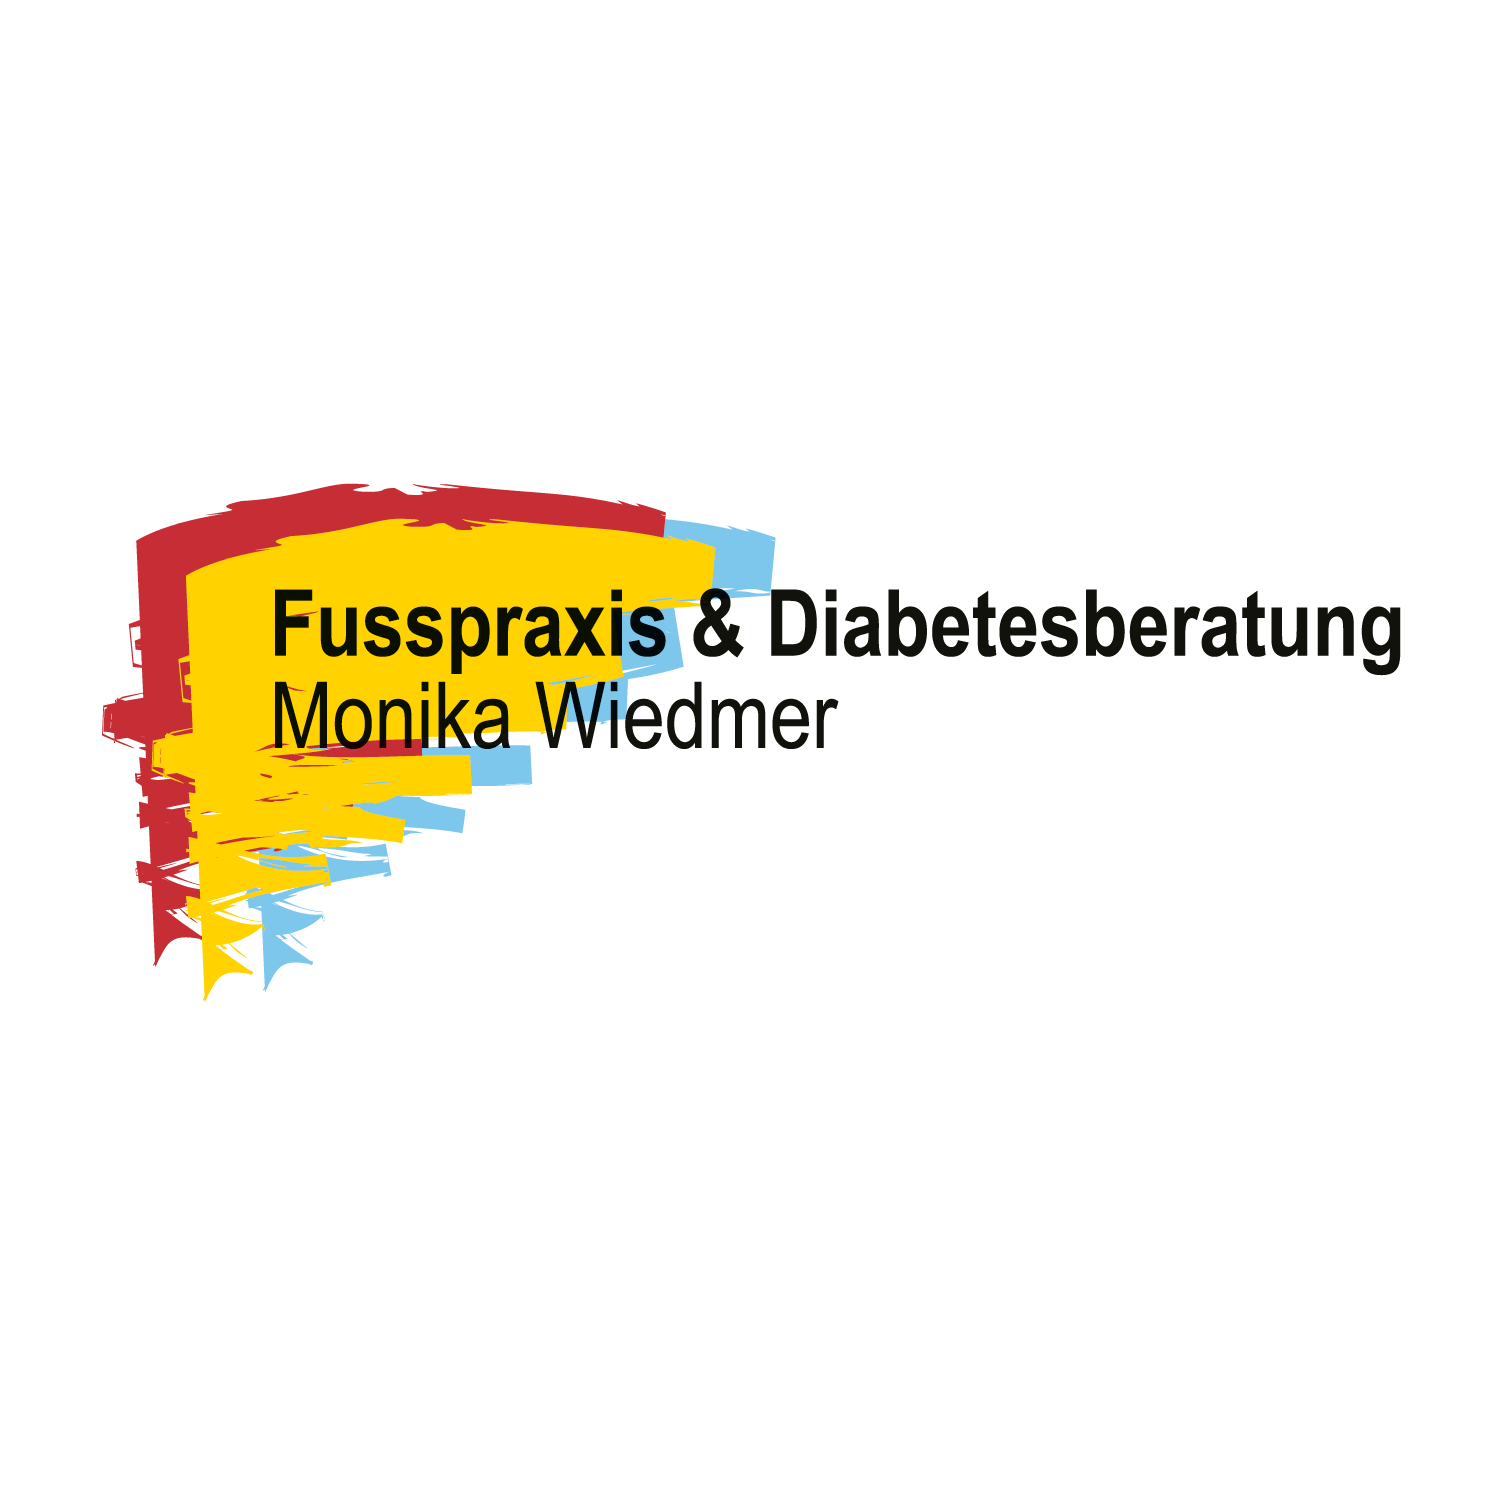 Fusspraxis & Diabetesberatung Monika Wiedmer Logo